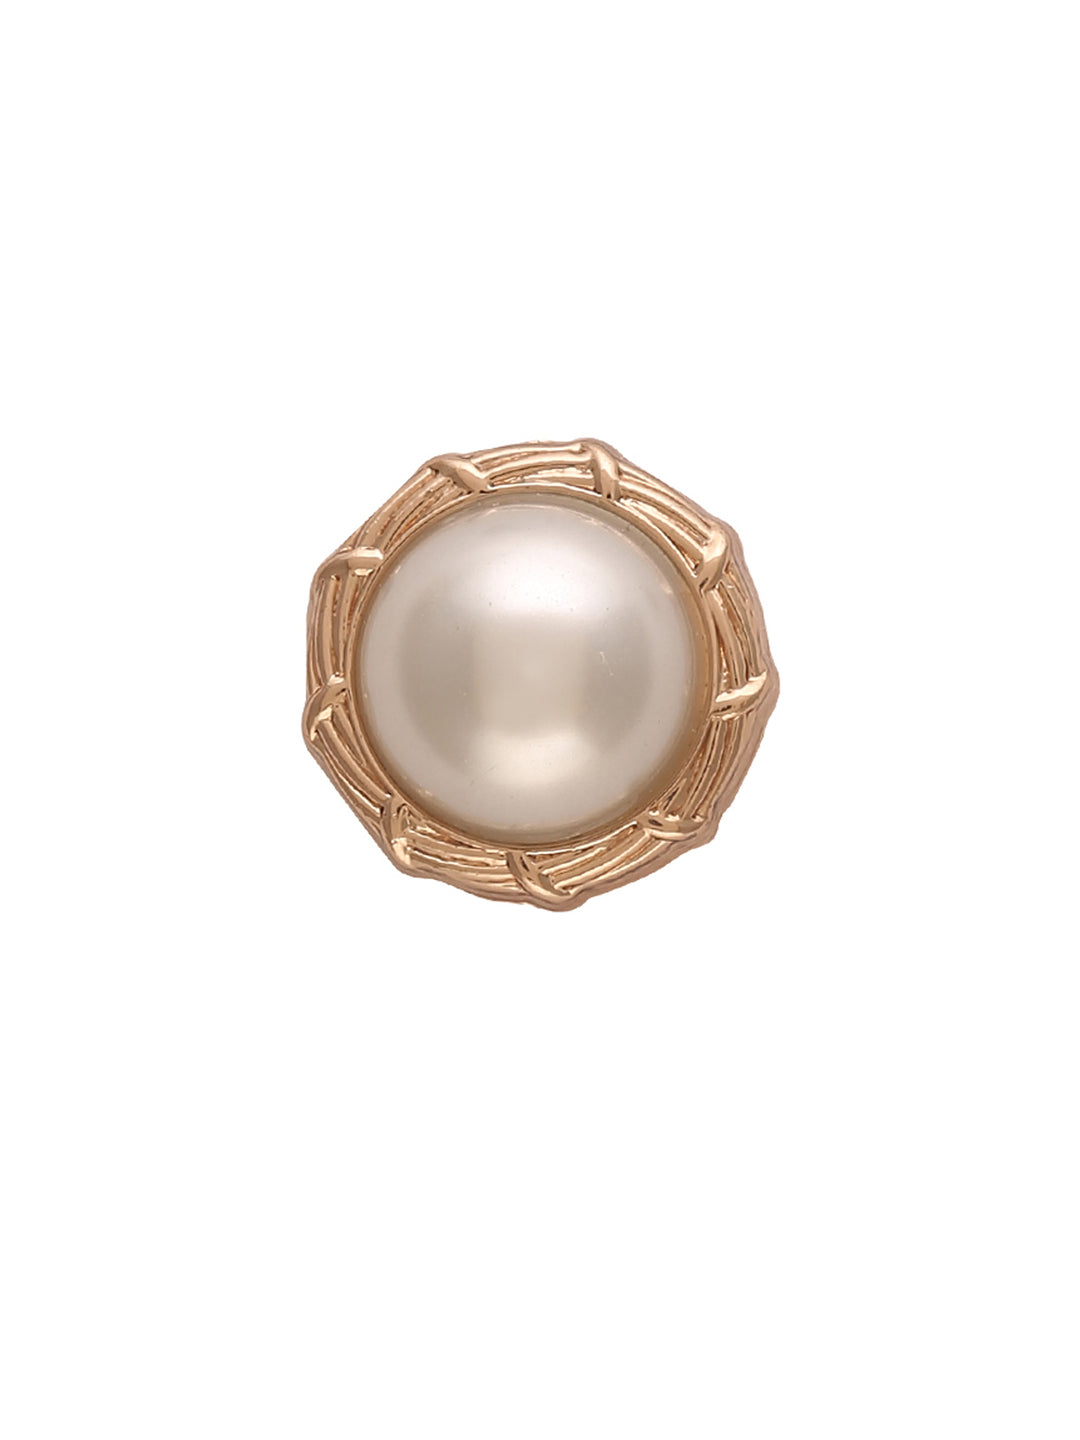 Super Classy Round Shape Golden Colour Pearl Buttons